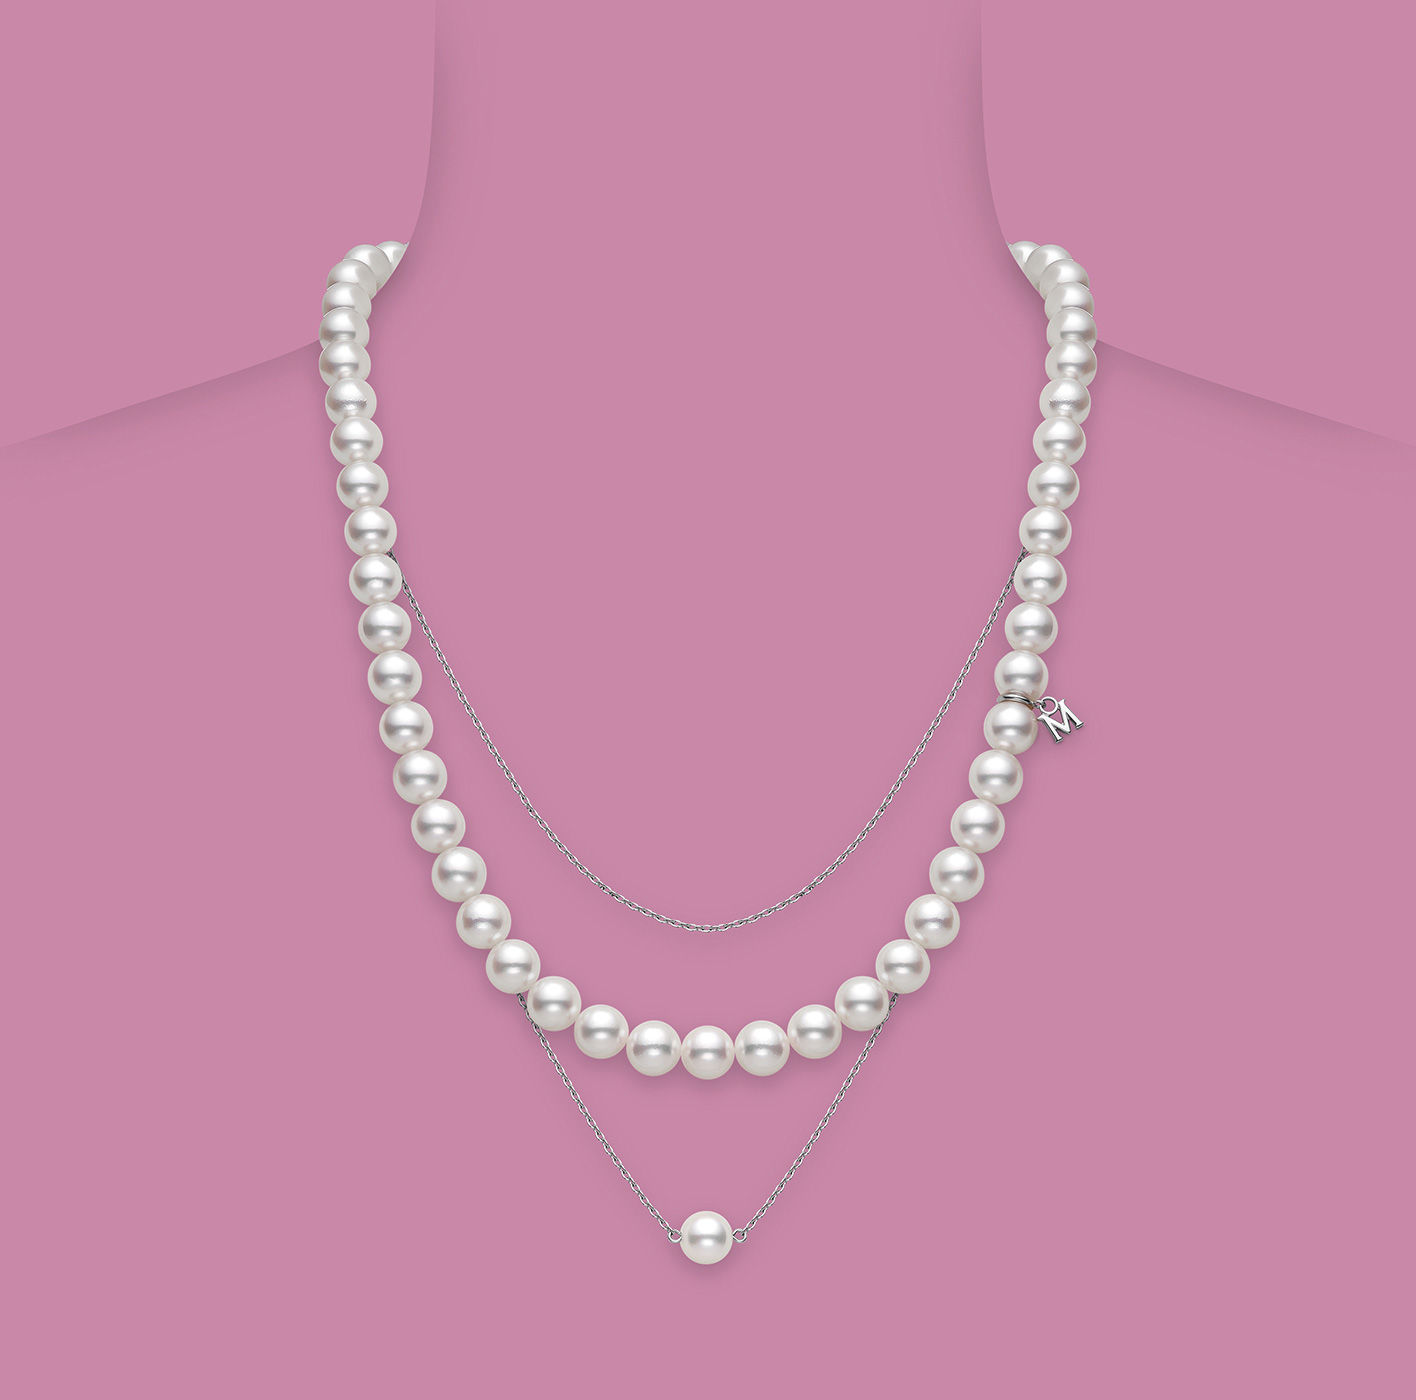 MIKIMOTO携手全球代言人迪丽热巴推出限量合作款珍珠项链